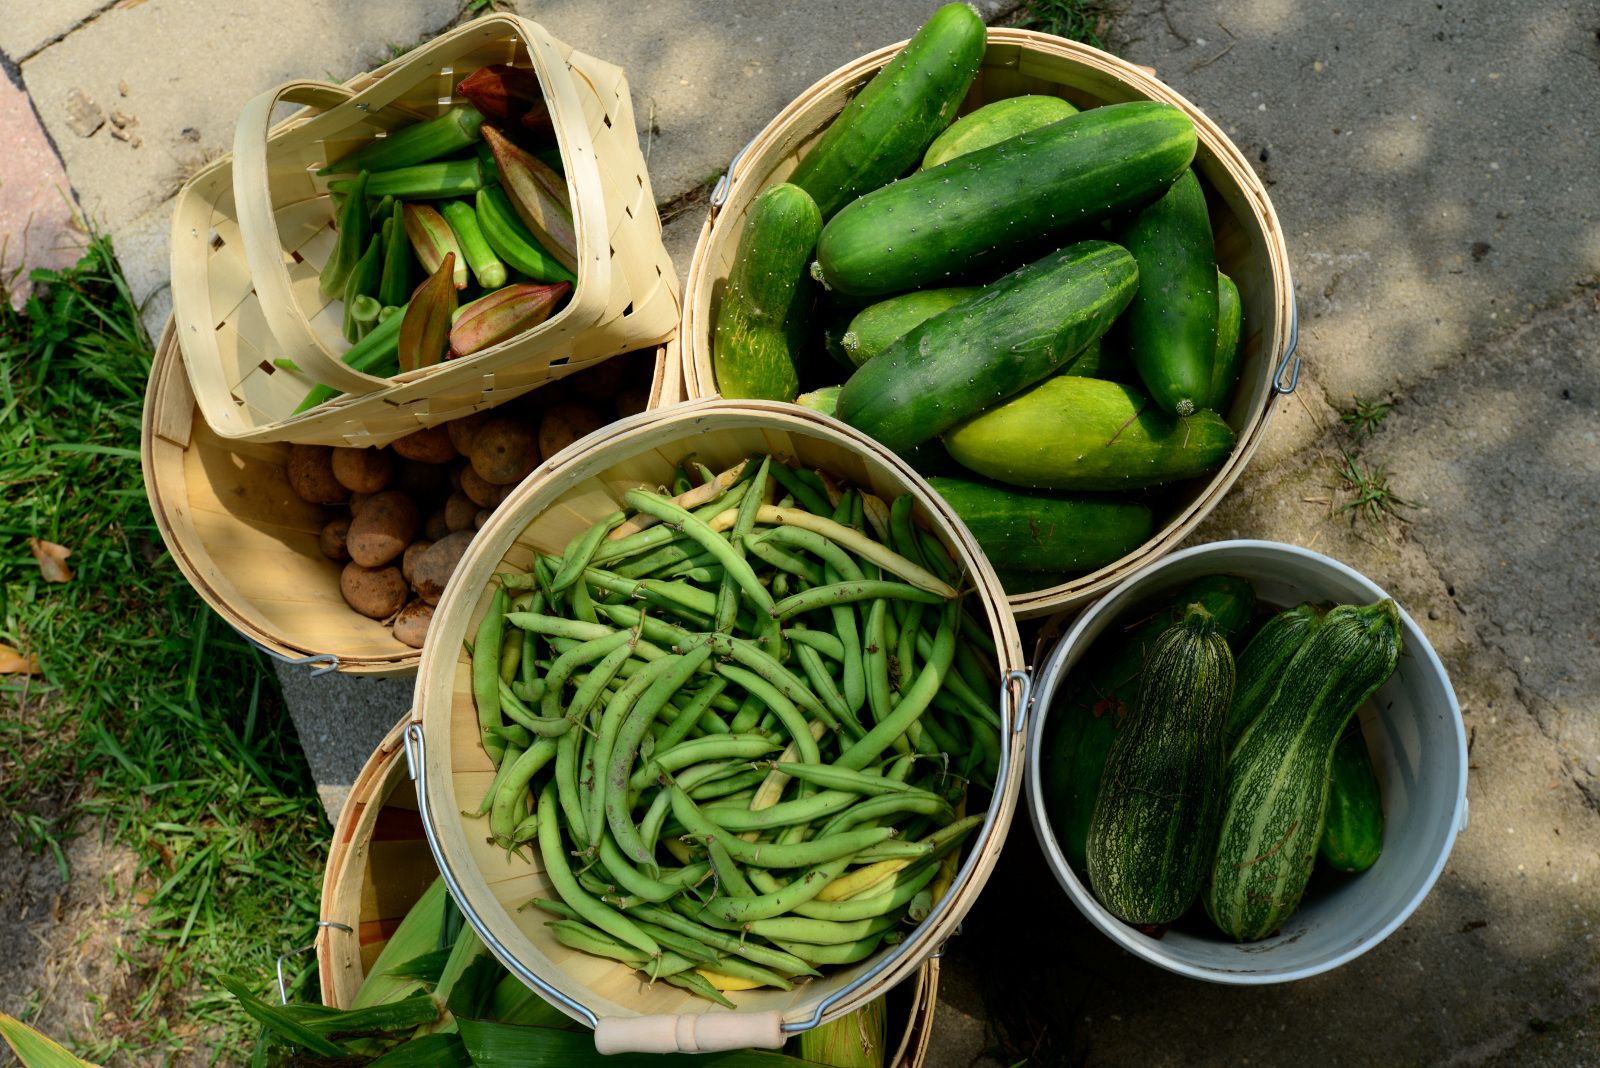 baskets of organic produce